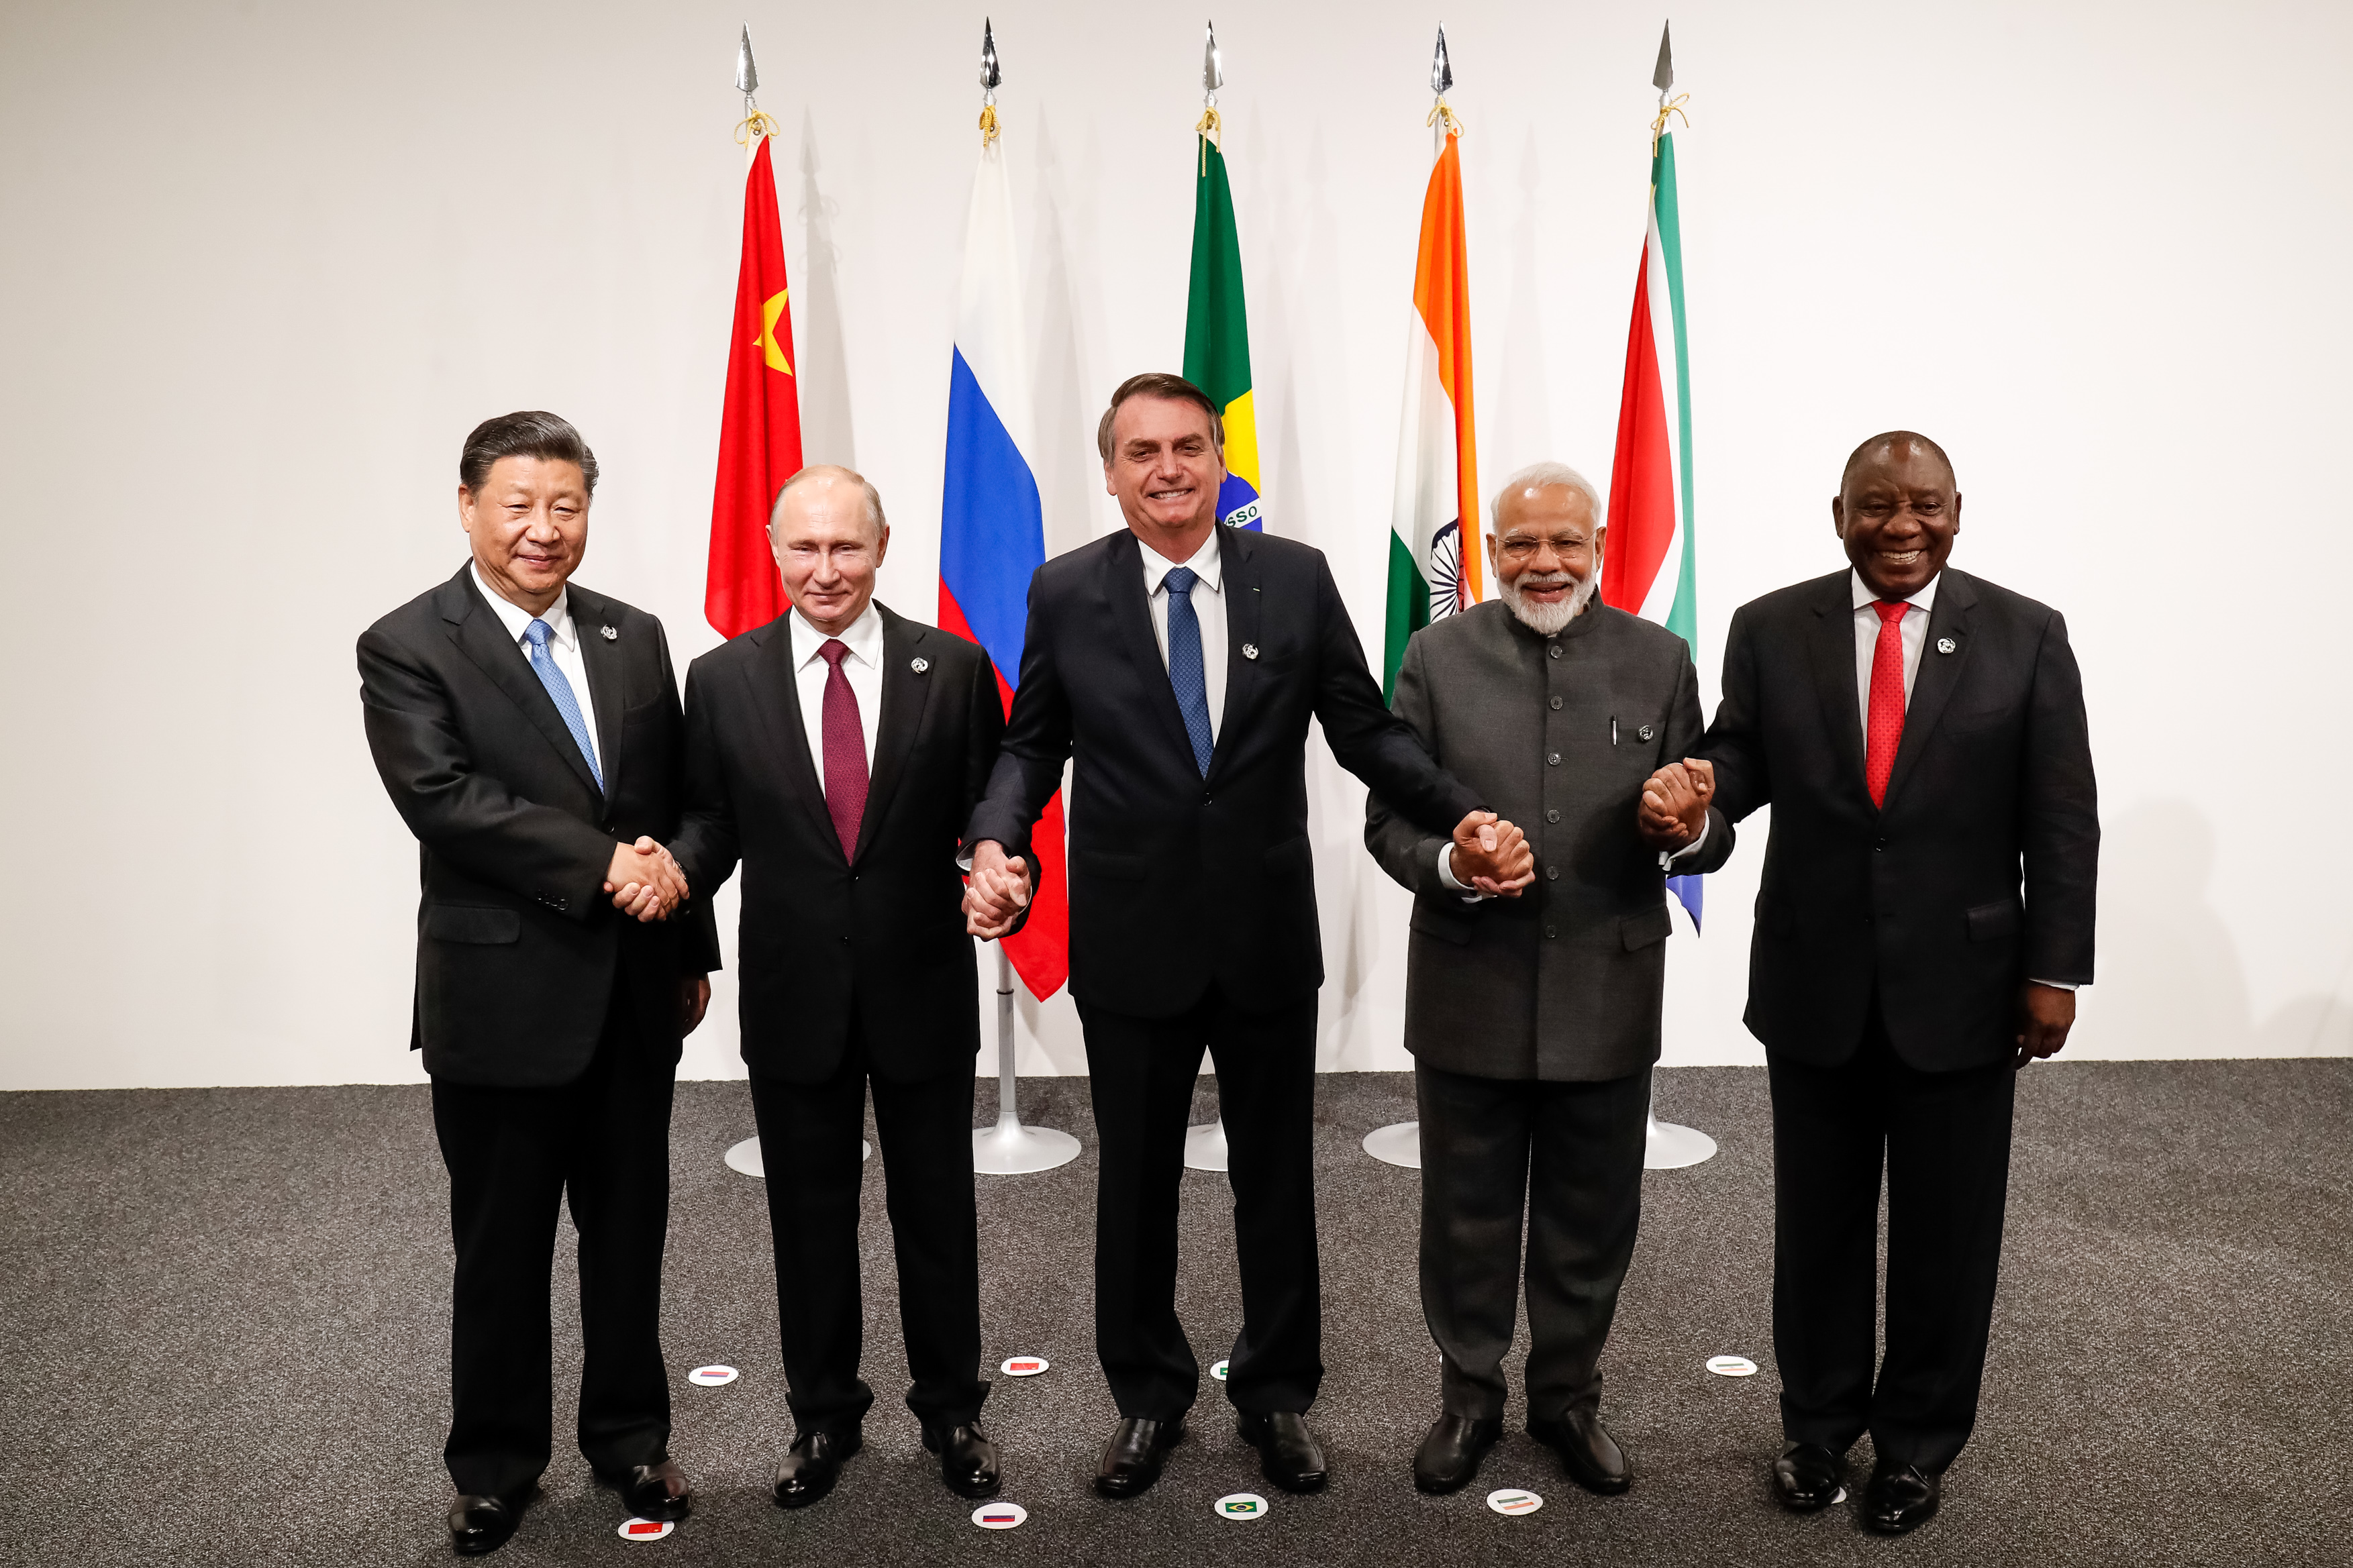 File:Informal meeting of the BRICS during the 2019 G20 Osaka summit.jpg